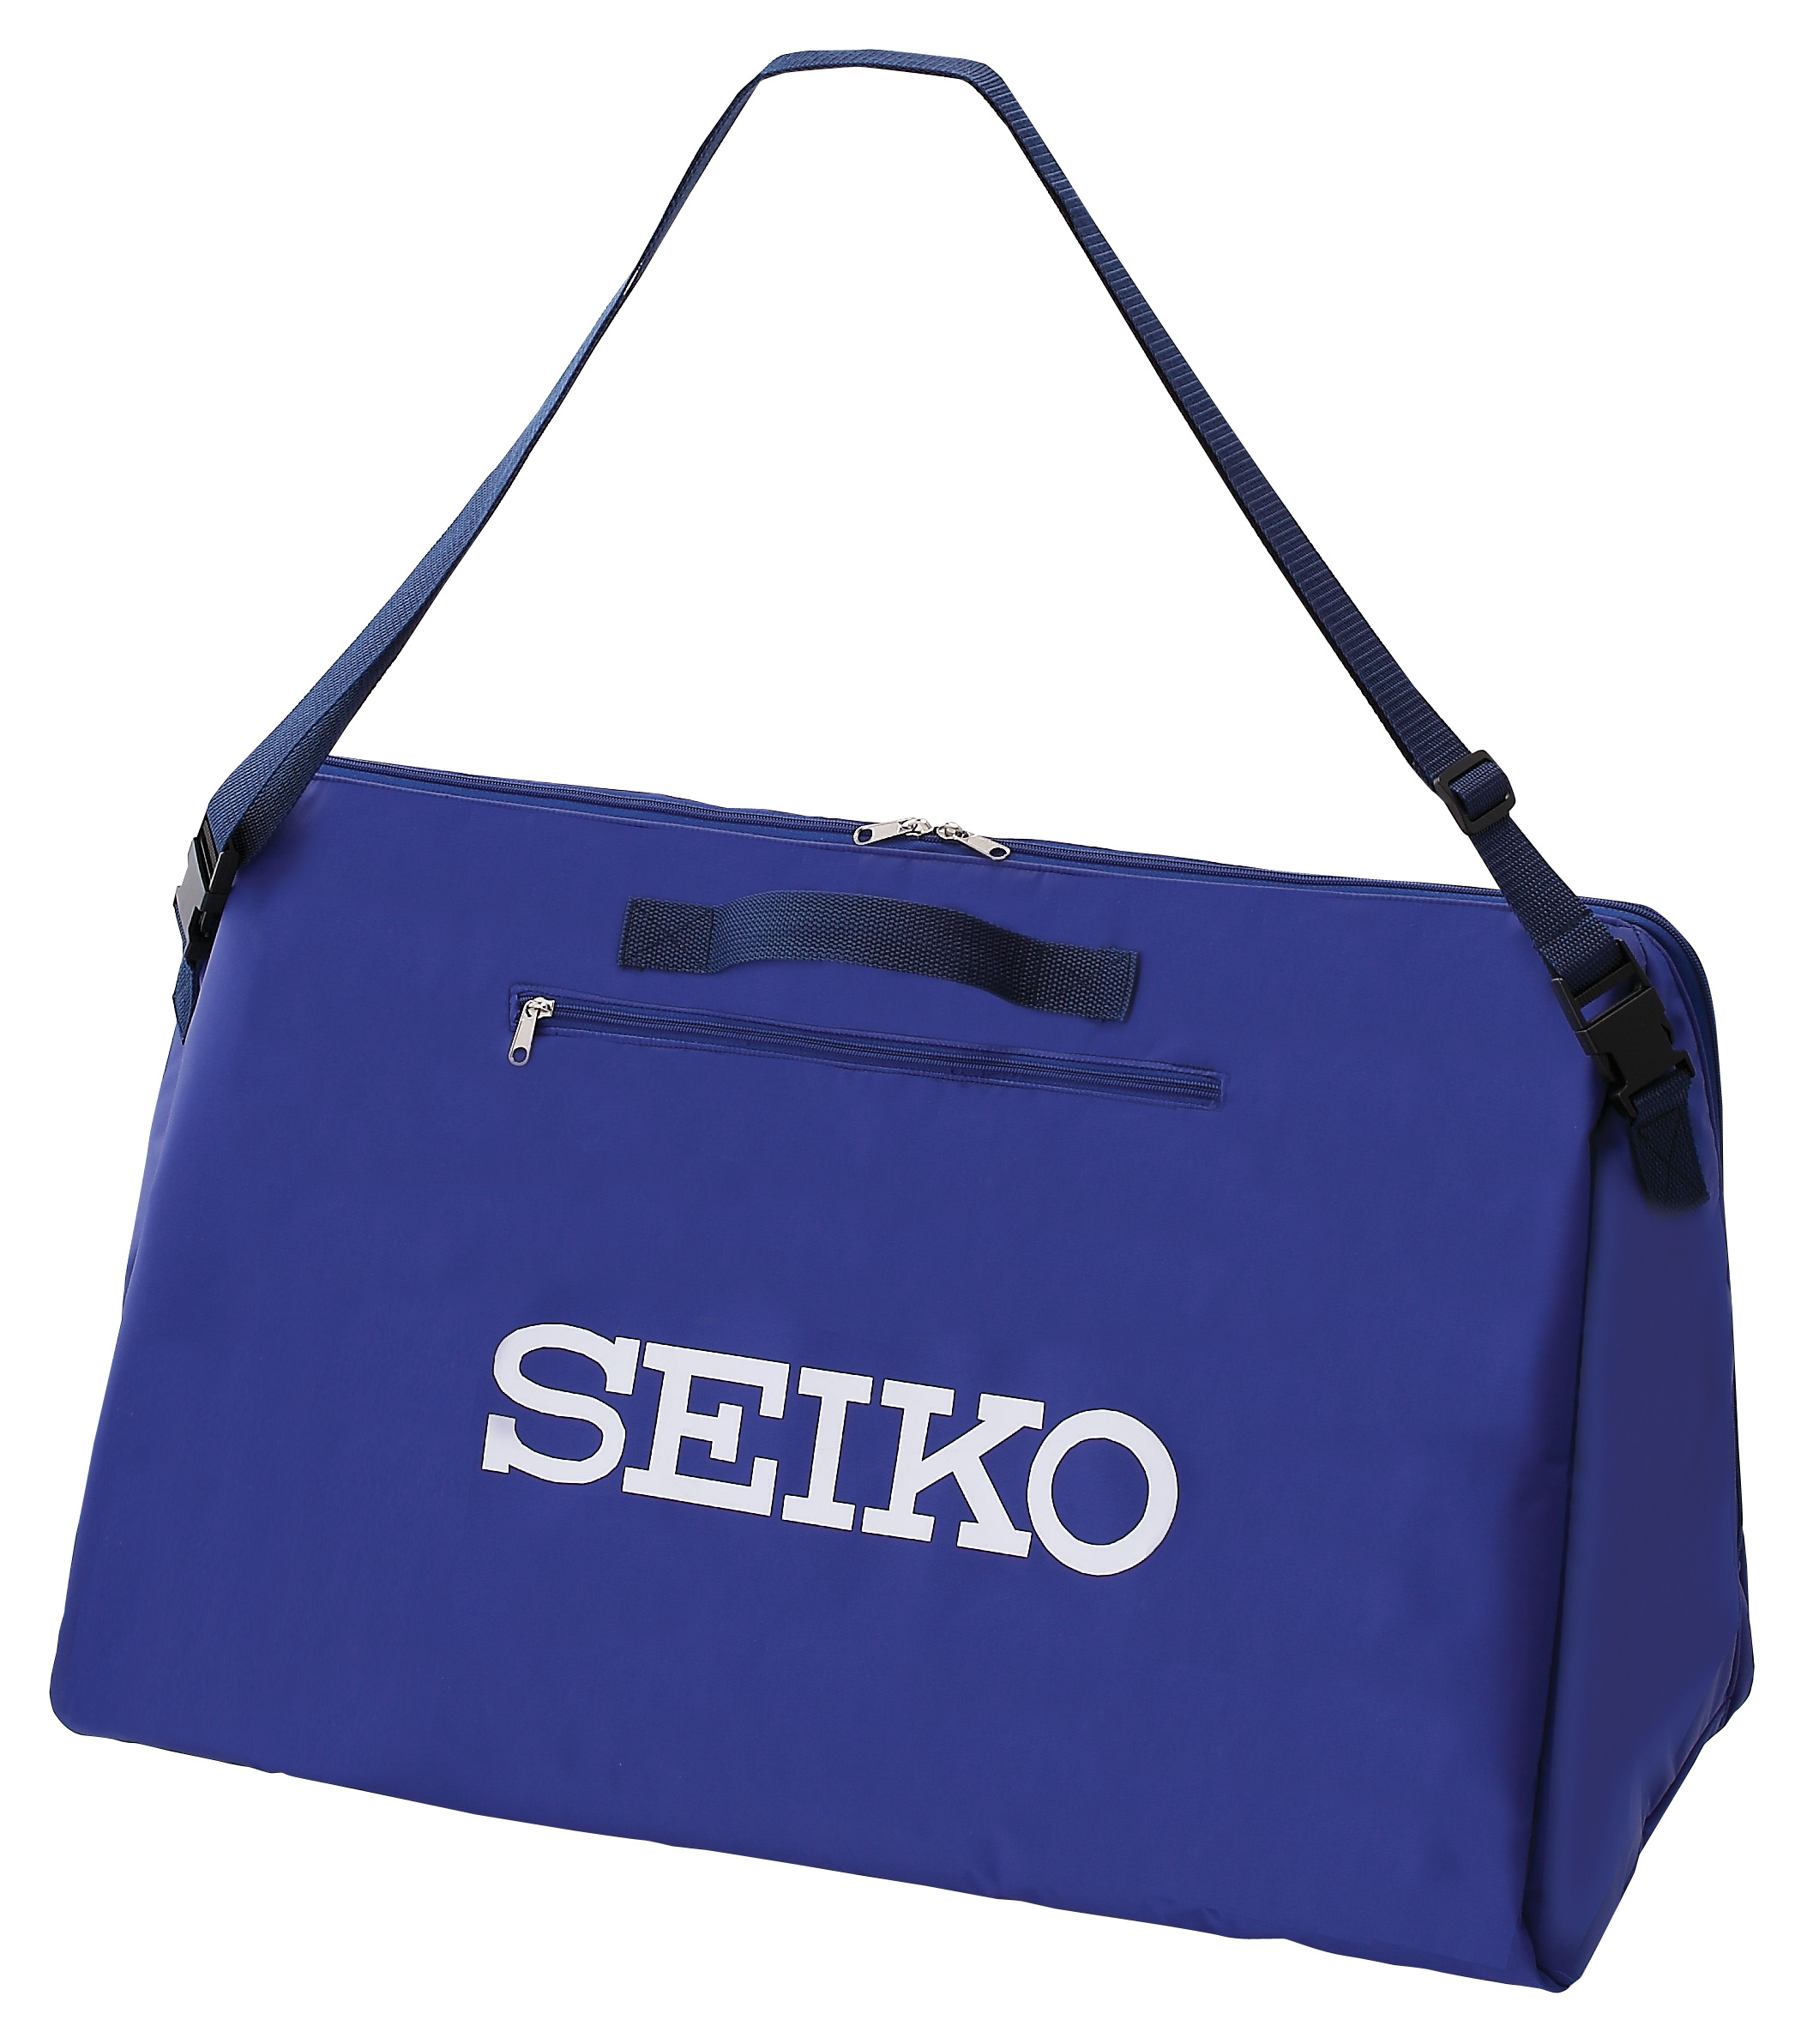 Seiko Scoreboard Carry Bag